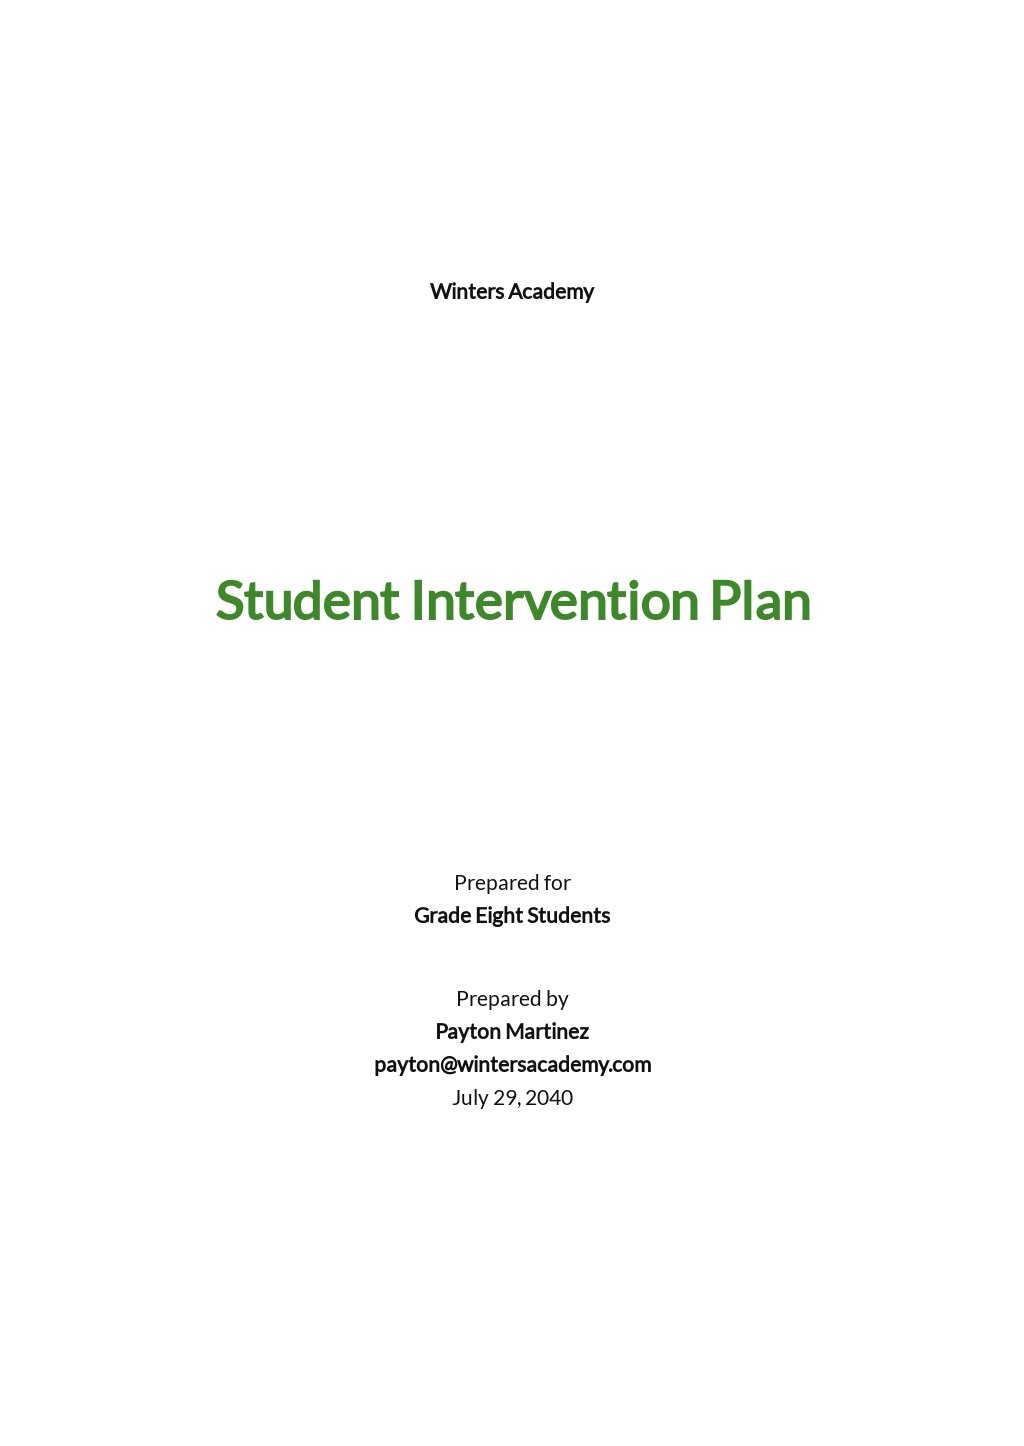 Student Intervention Plan Template.jpe